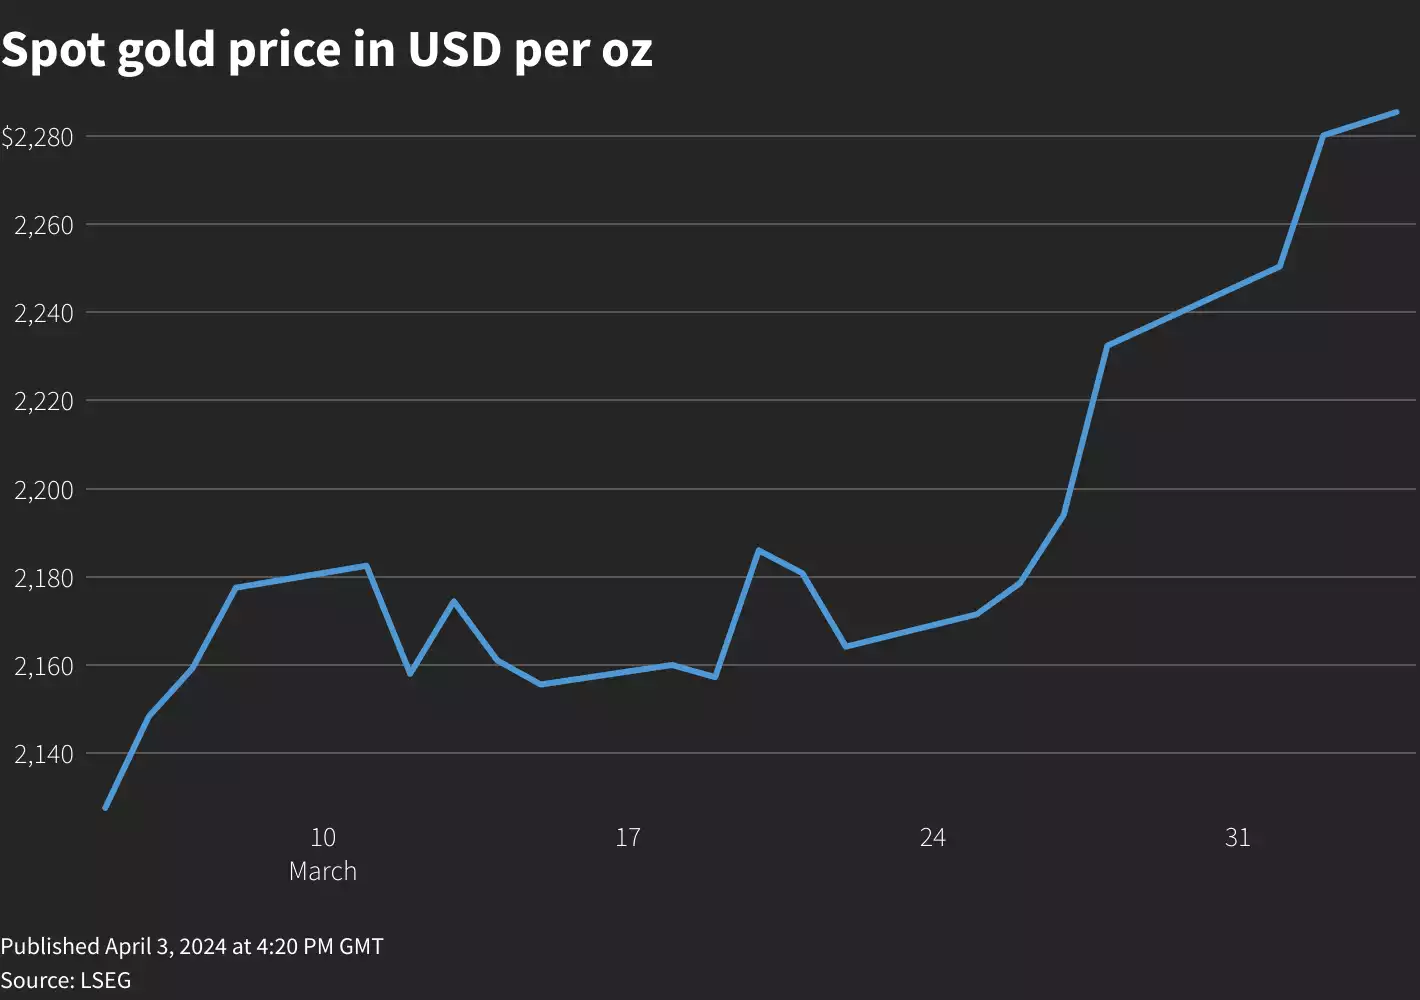 Spot gold price in USD per oz